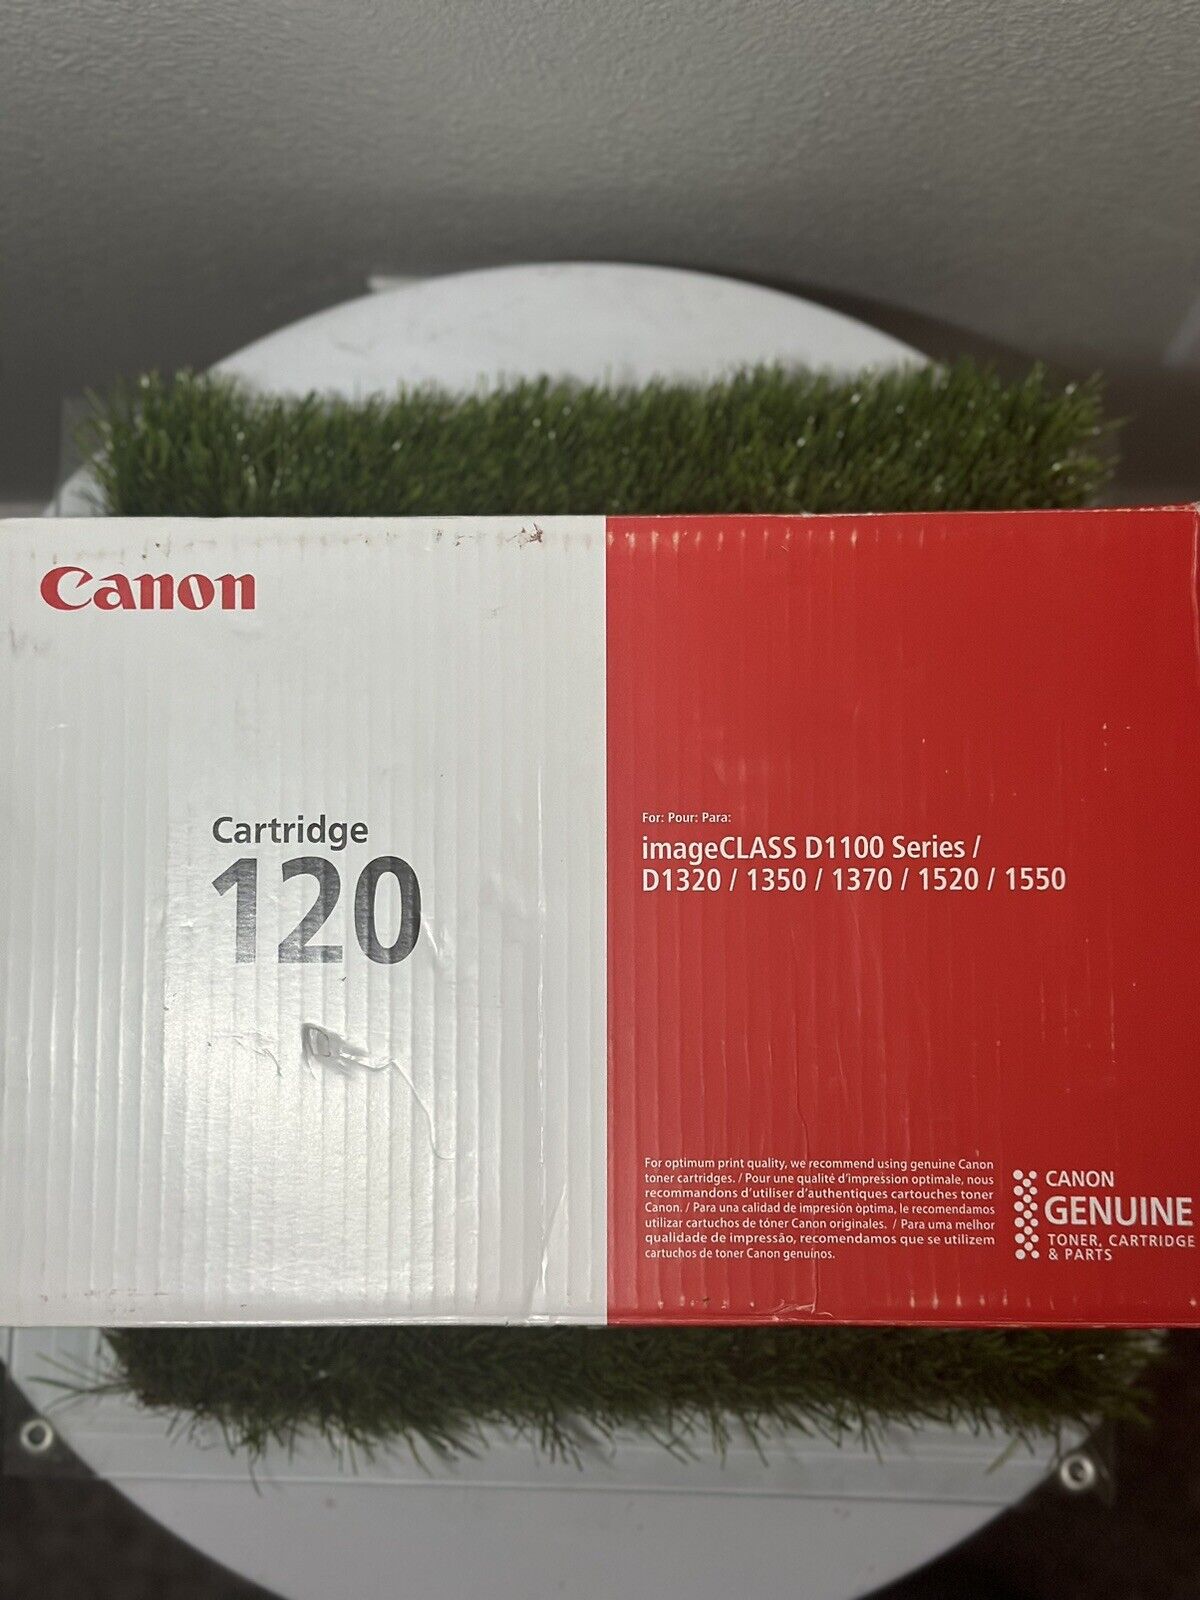 Authentic Canon 120 Toner Cartridge (Black) Brand New Sealed 